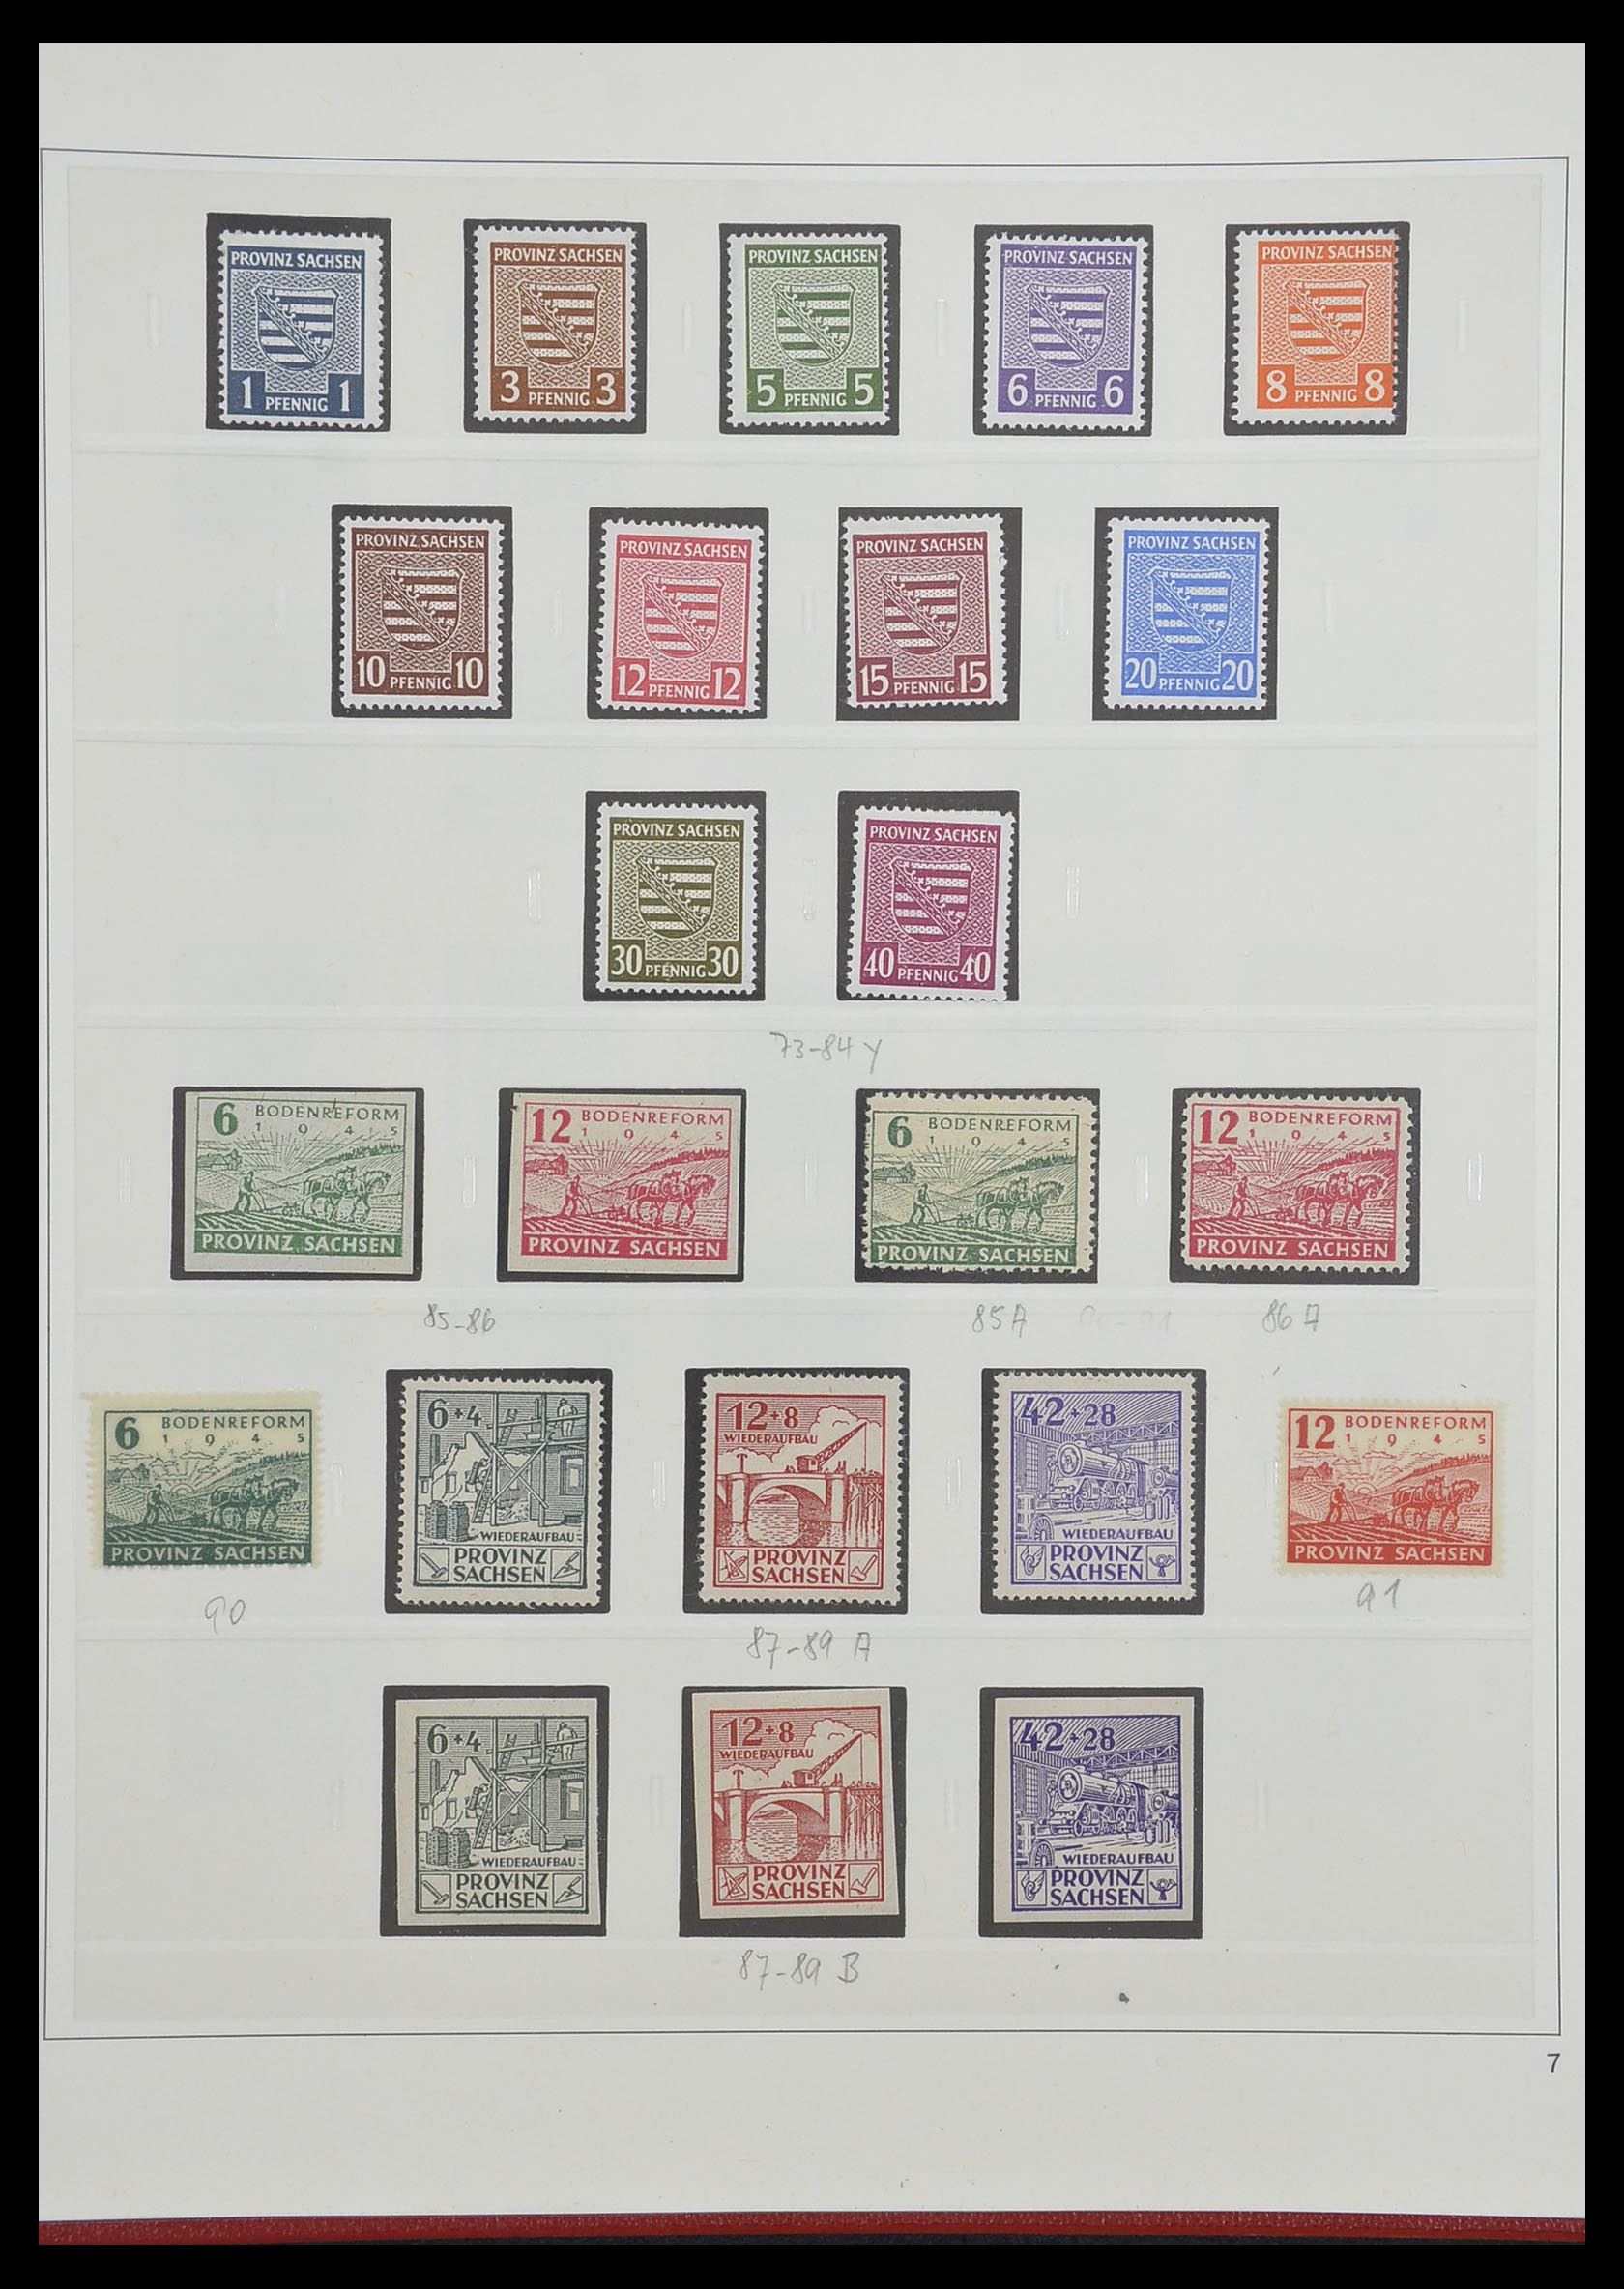 33208 040 - Stamp collection 33208 German Zones 1945-1949.